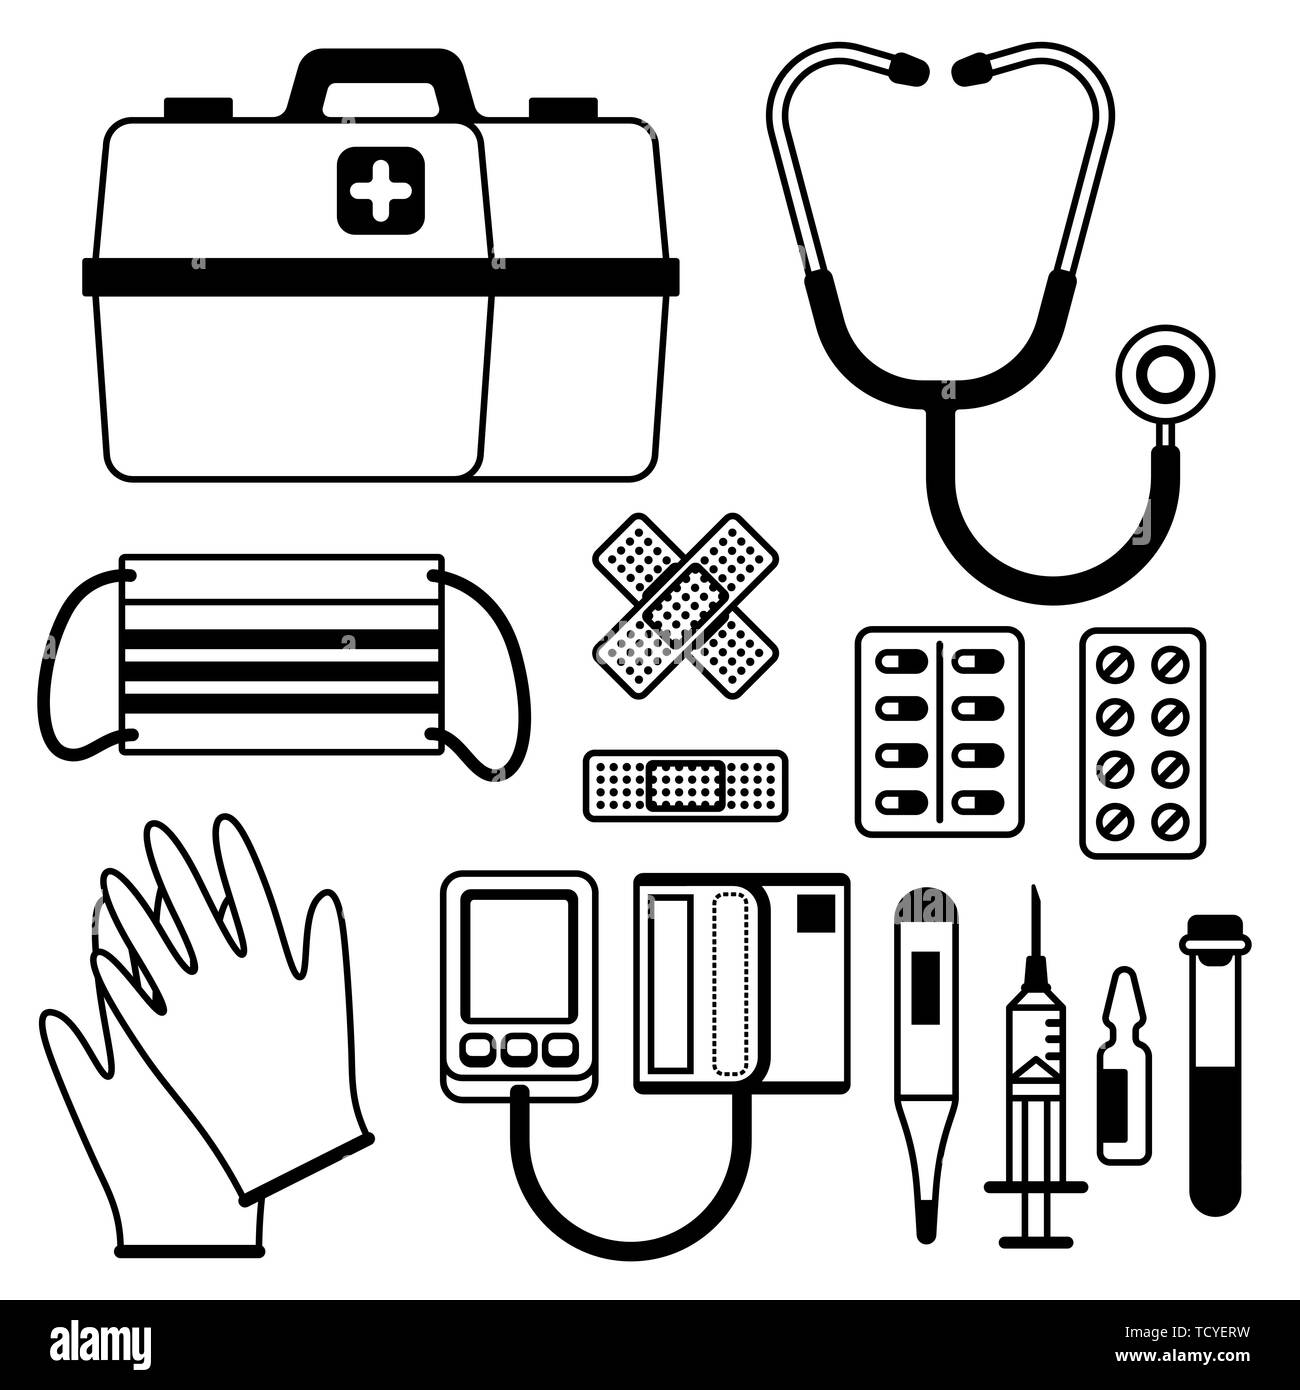 How to Draw a First Aid Box || Shaem Art - video Dailymotion-saigonsouth.com.vn